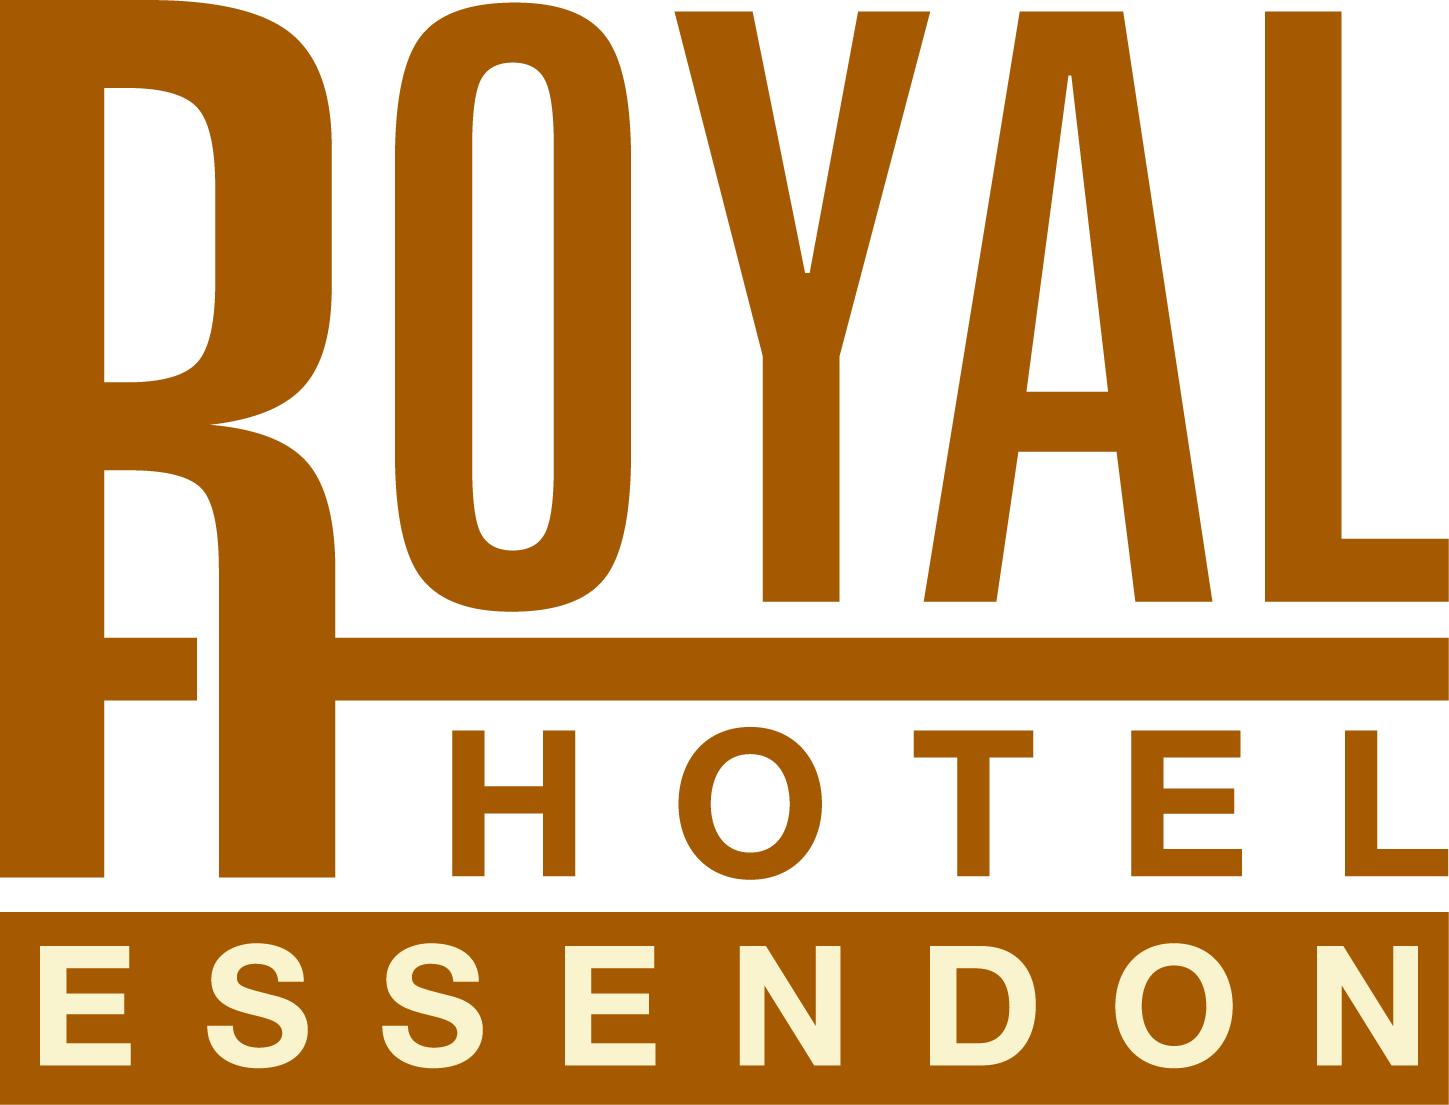 Royal Hotel, Essendon, VIC